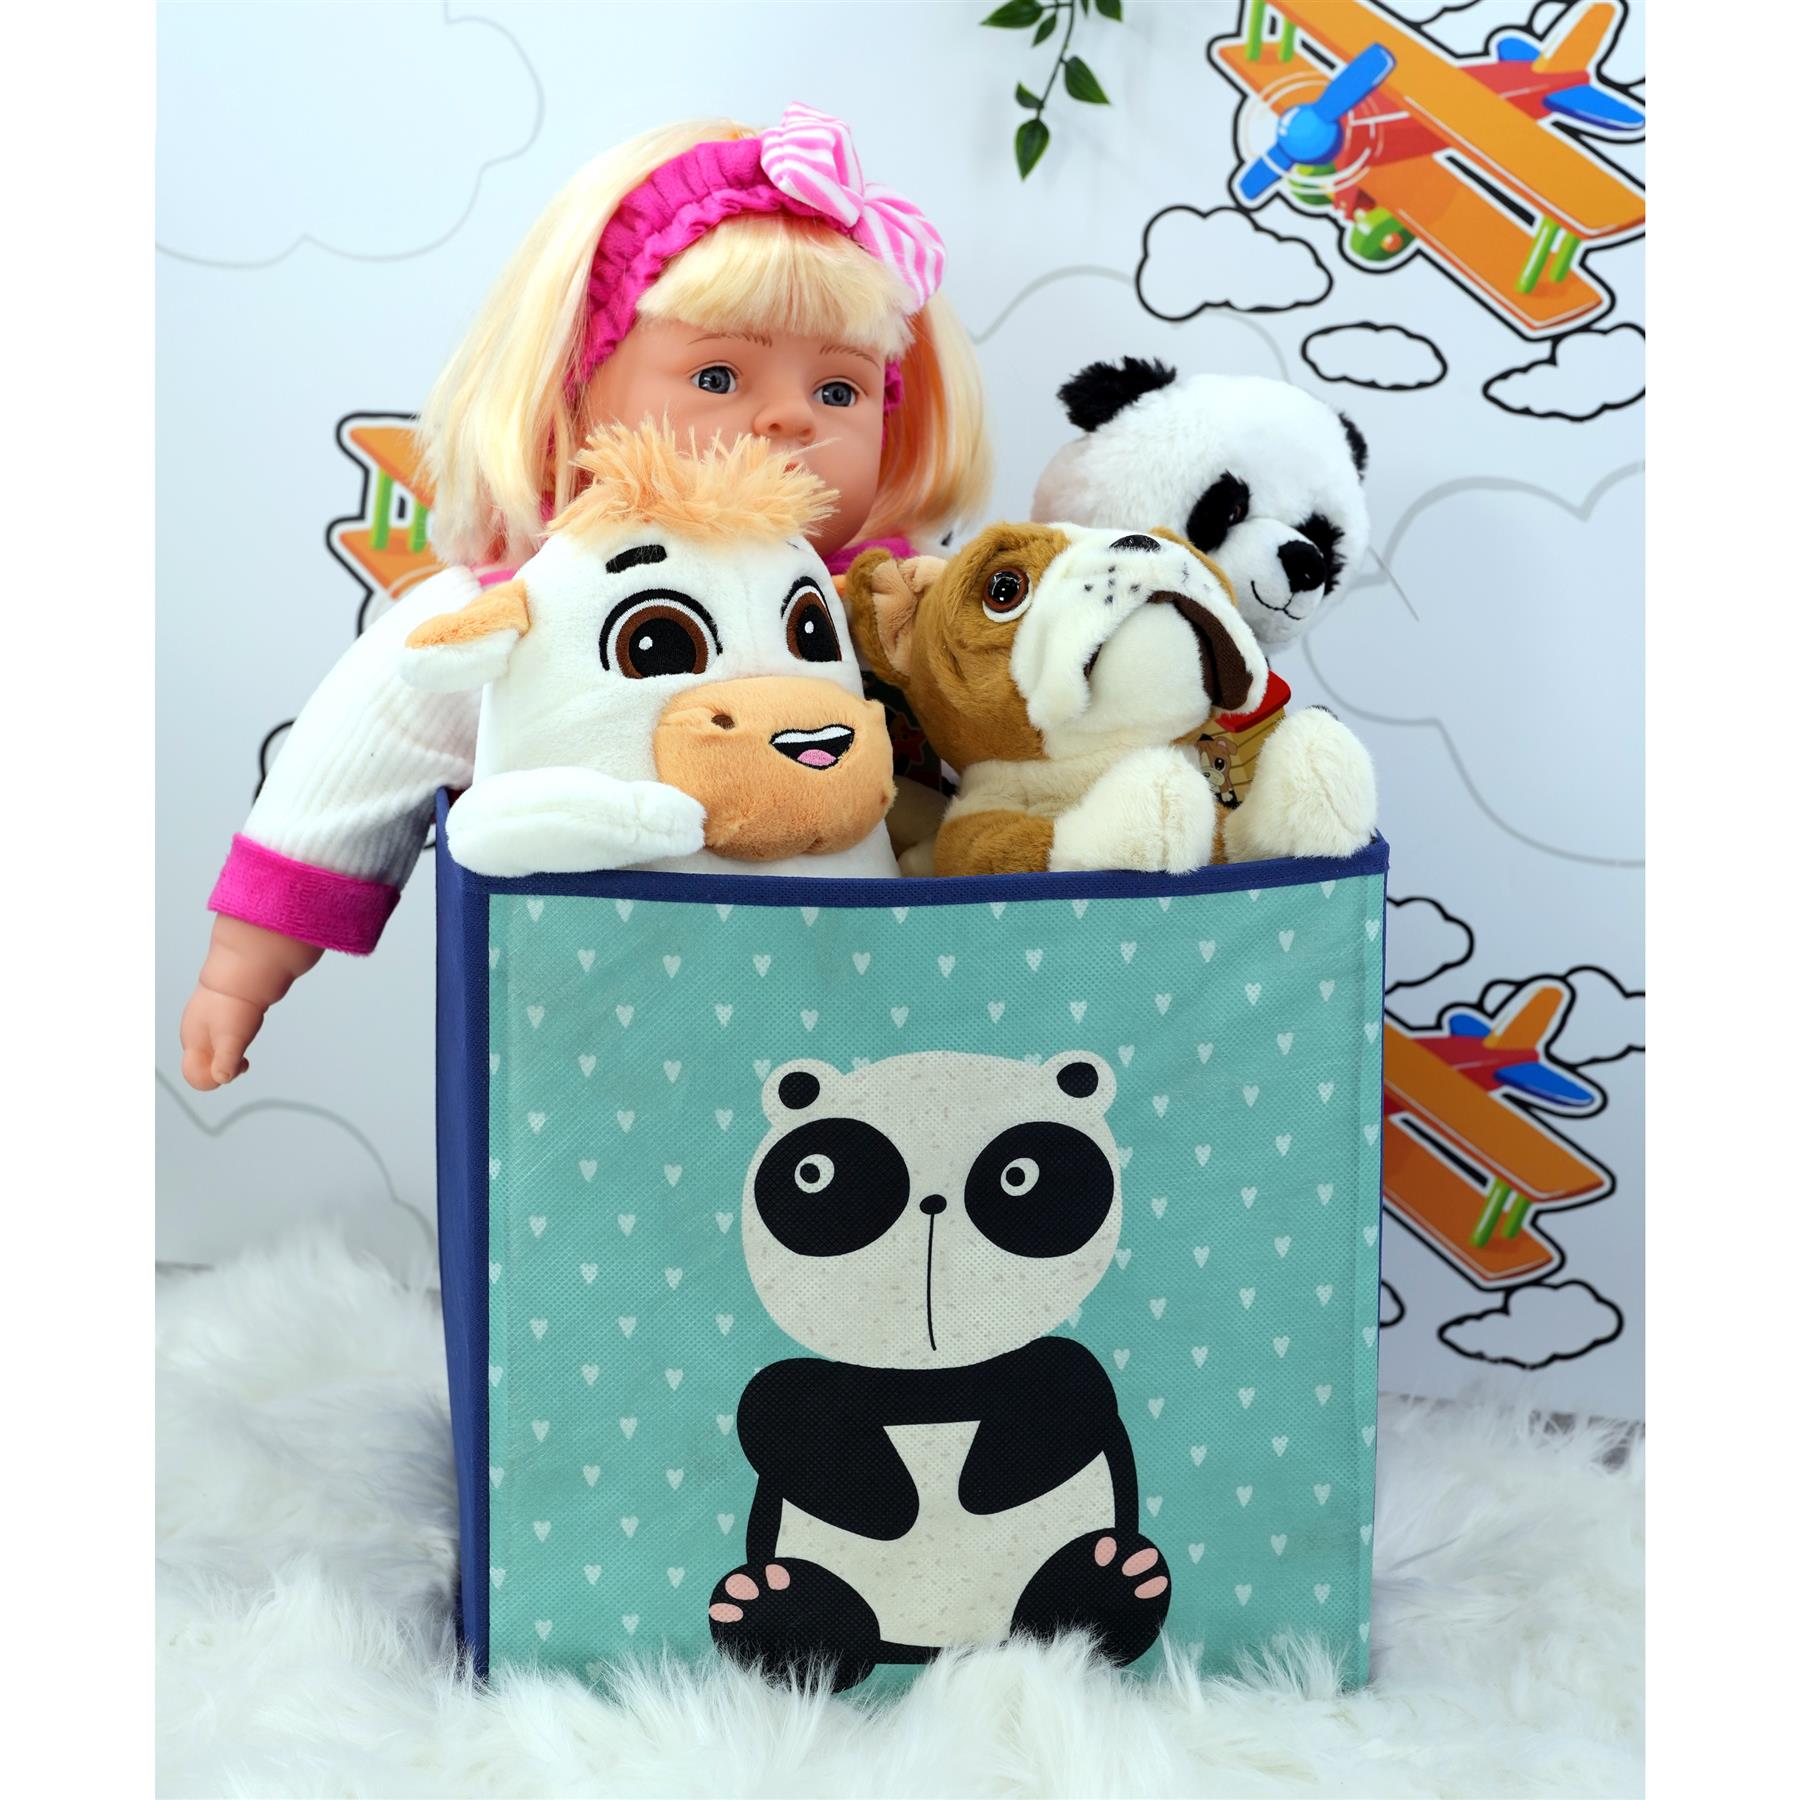 The Magic Toy Shop Storage Cube Panda Design Foldable Storage Box